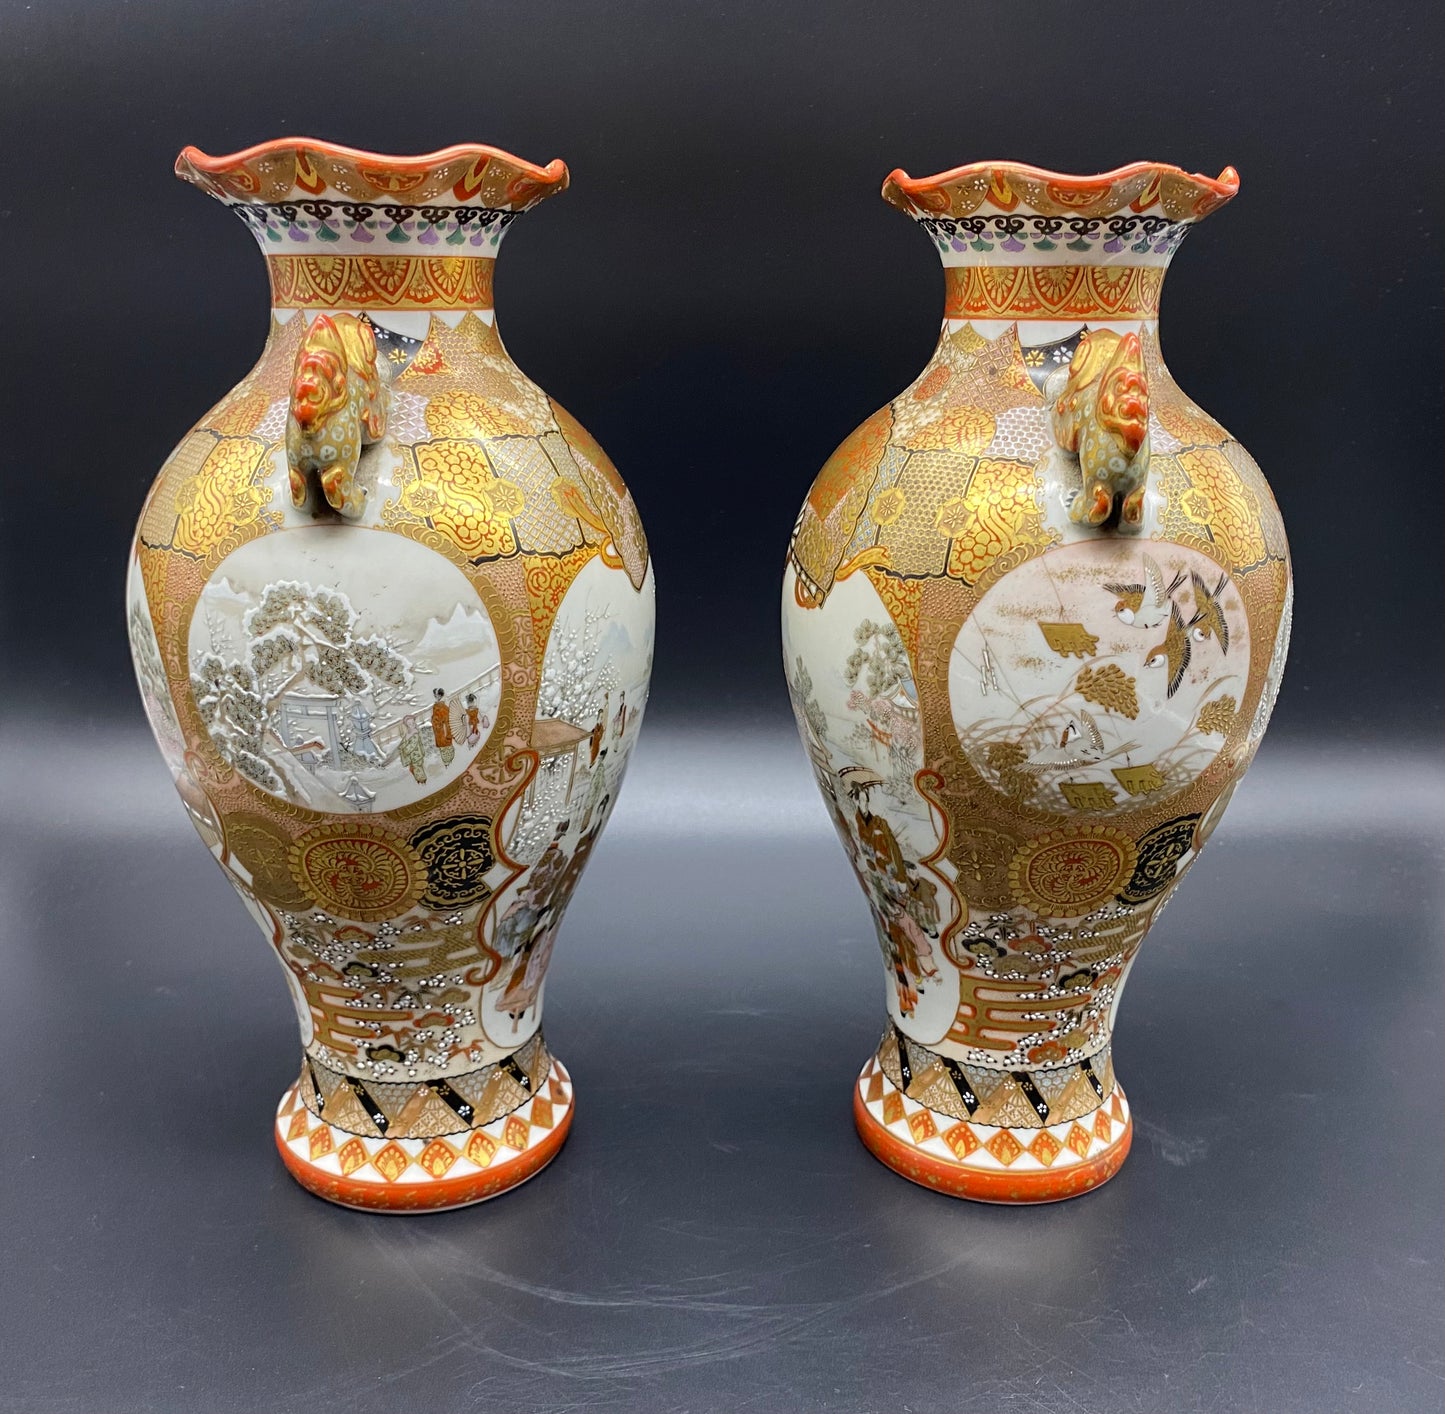 Buy Antiques Online - Japanese Satsuma Meiji Vase High Quality SIGNED PAIR